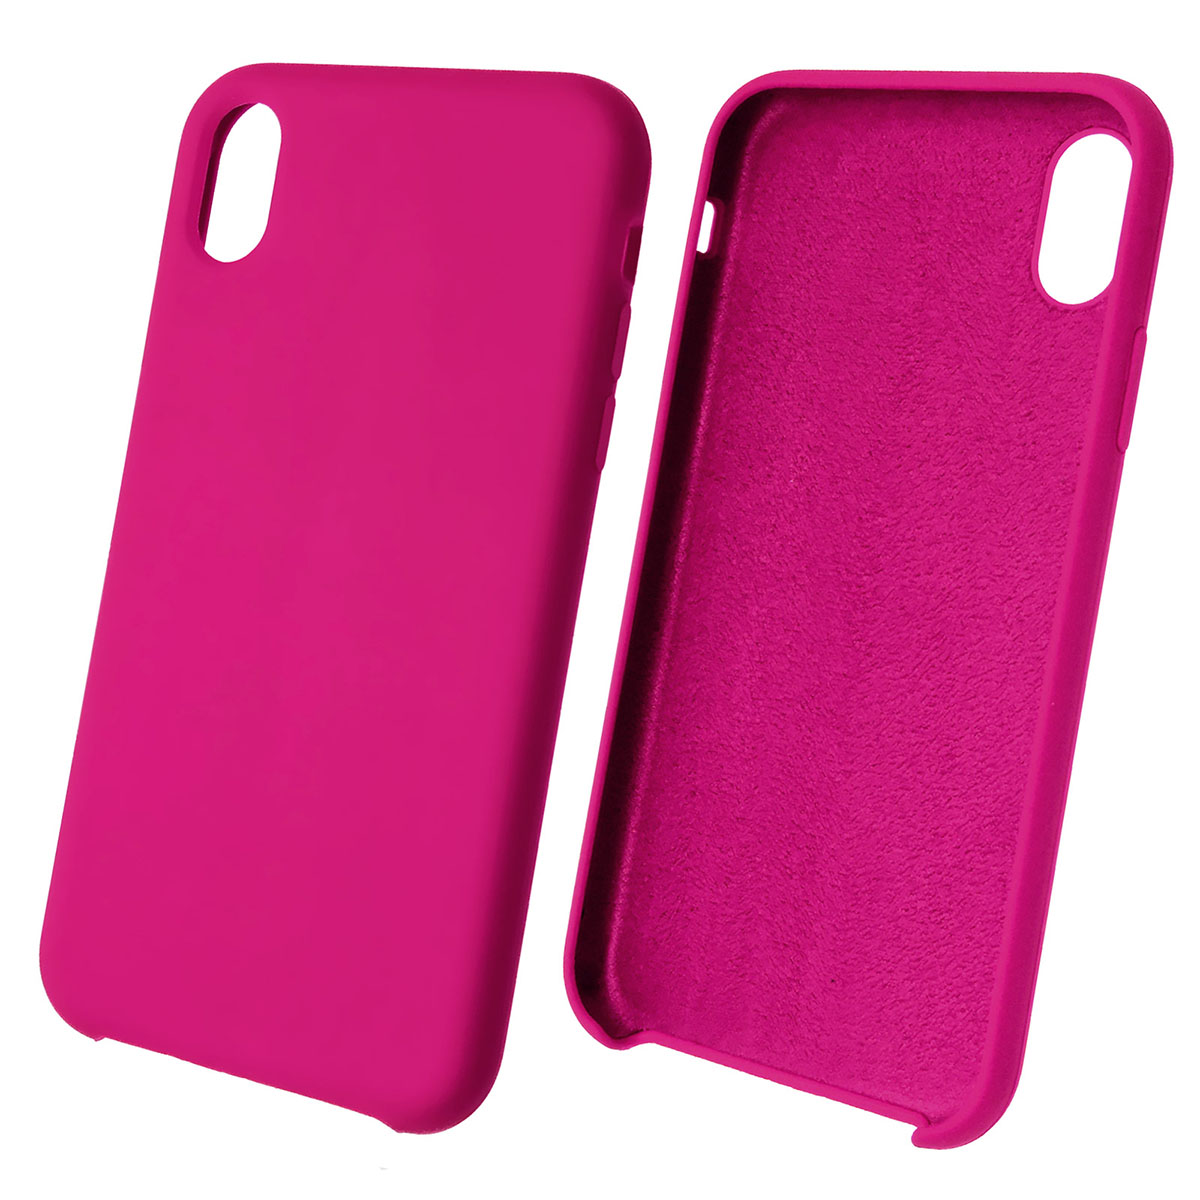 Чехол накладка Silicon Case для APPLE iPhone XR, силикон, бархат, цвет пурпурно красный.